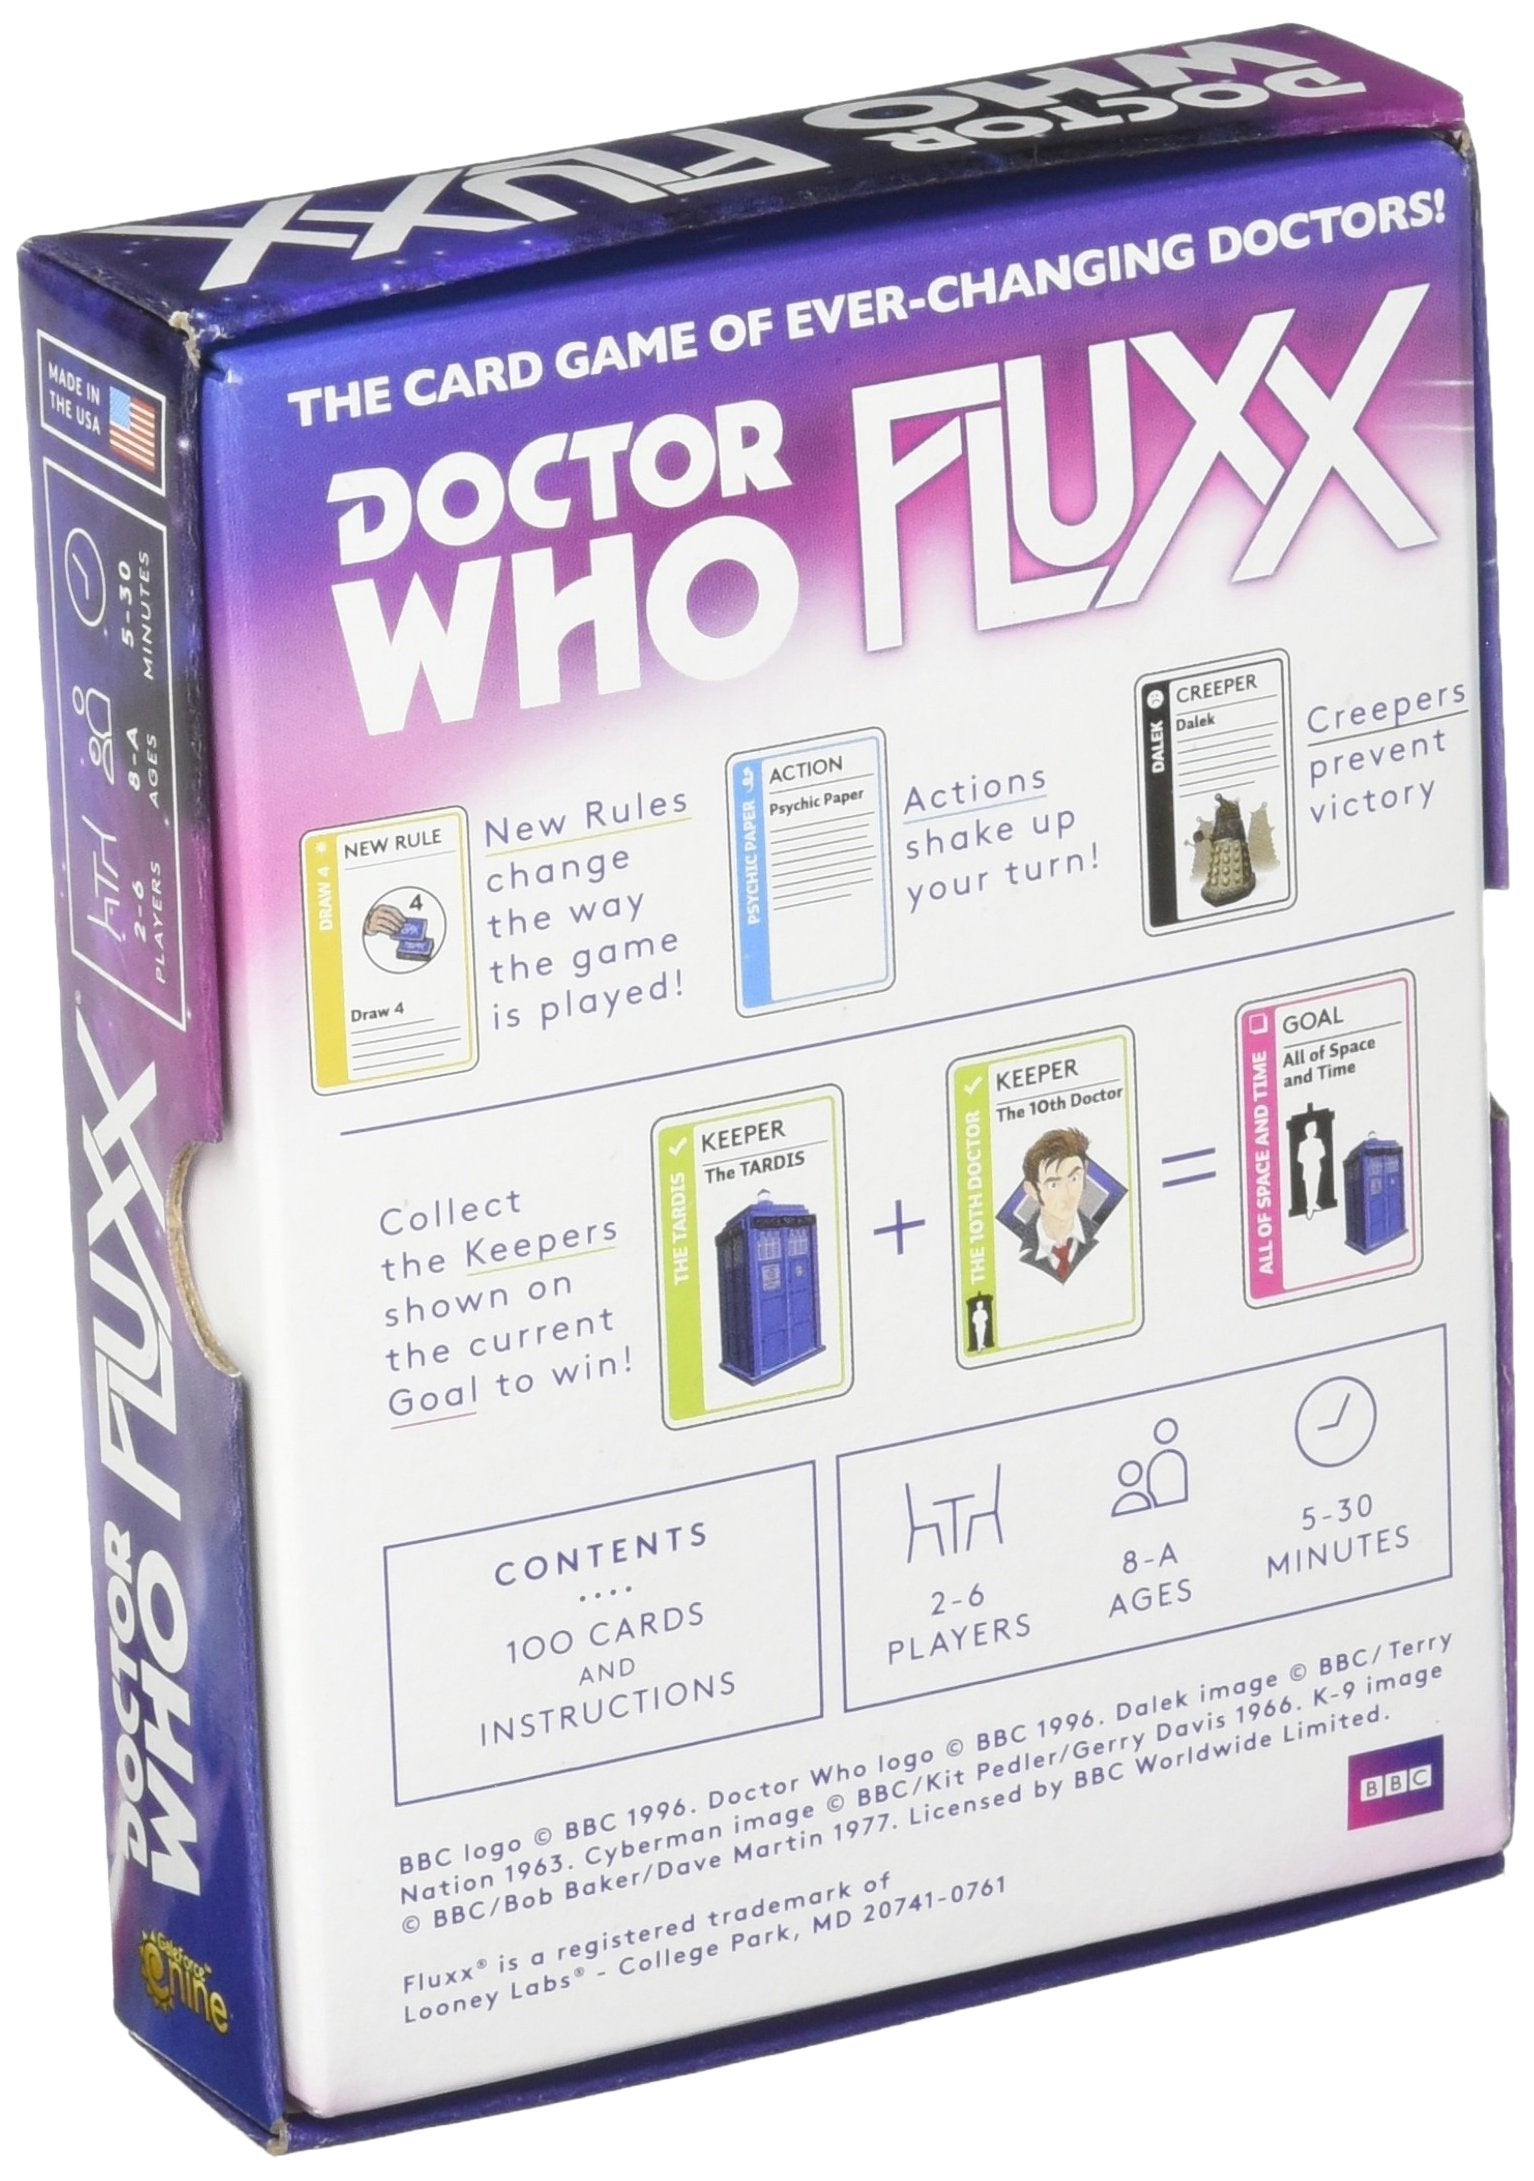 Doctor WHO Fluxx | I Want That Stuff Brandon